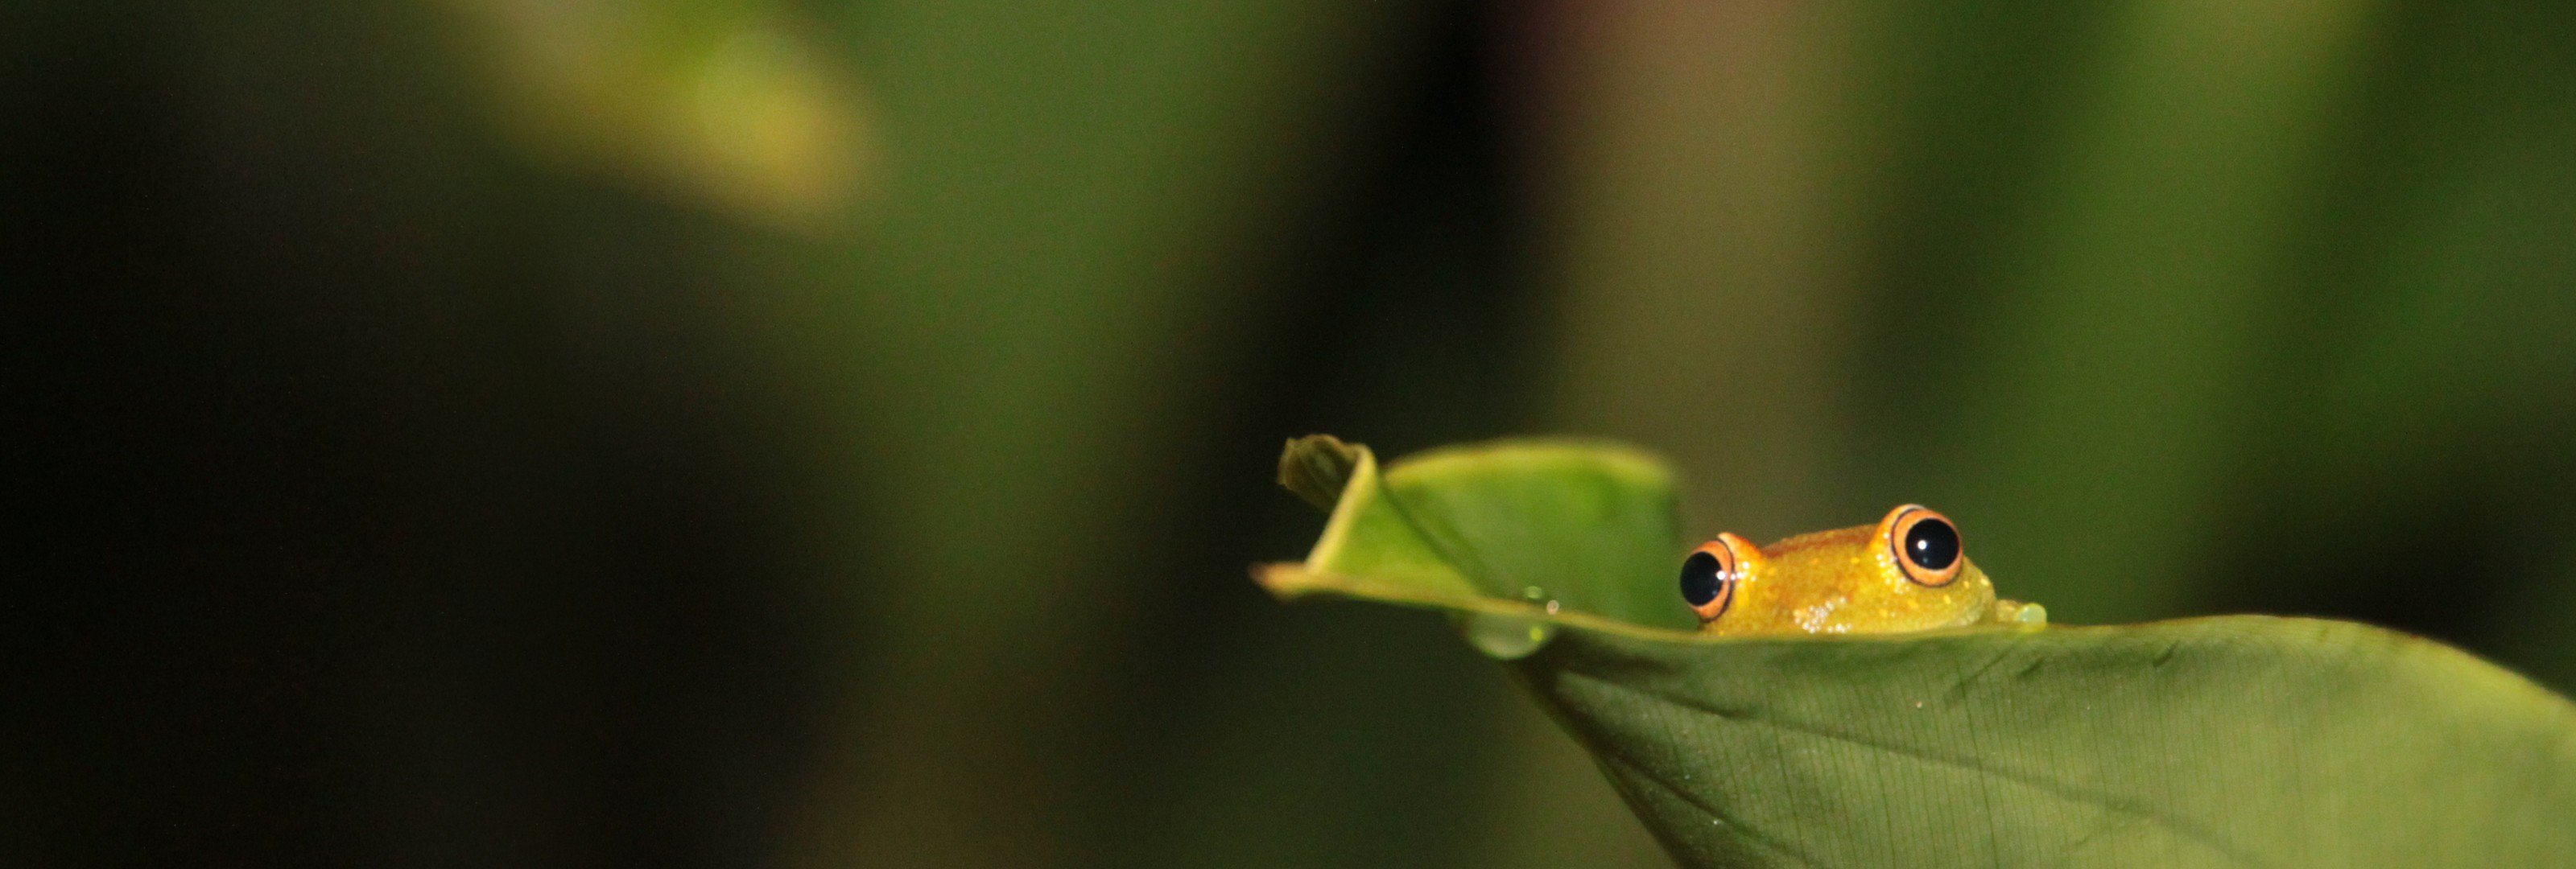 Frog Macro Blurred Leaves Photography Wallpaper HD Desktop